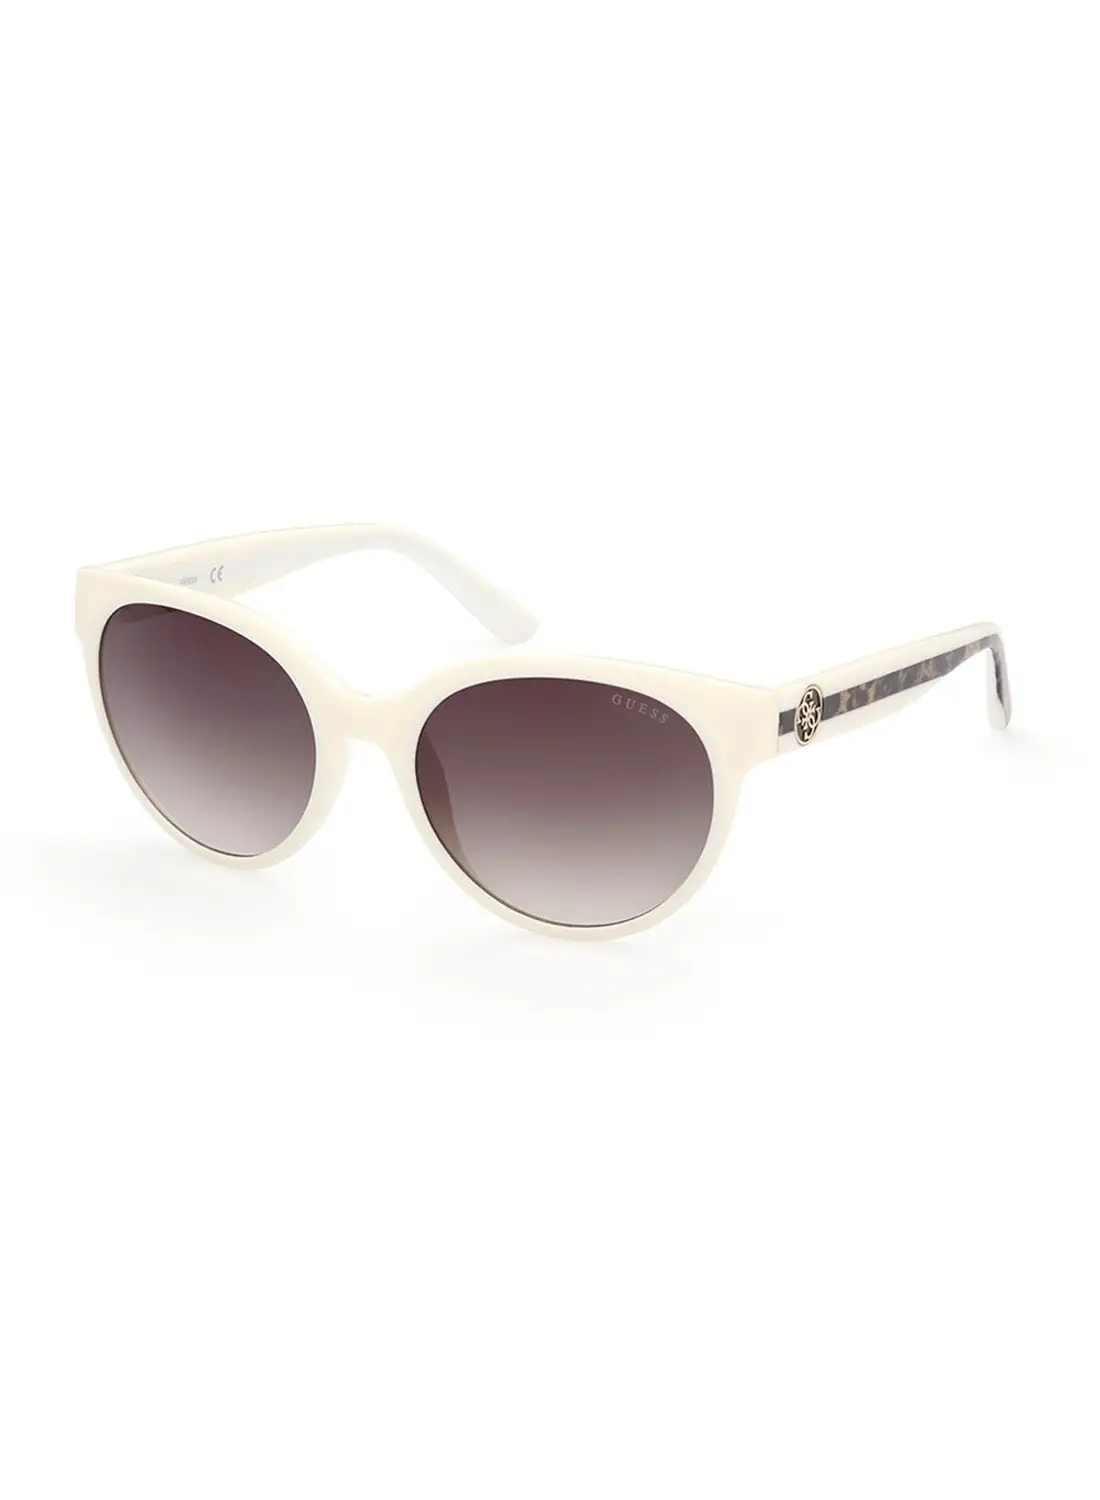 GUESS Women's UV Protection Round Shape Sunglasses - GU782425P55 - Lens Size: 55 Mm